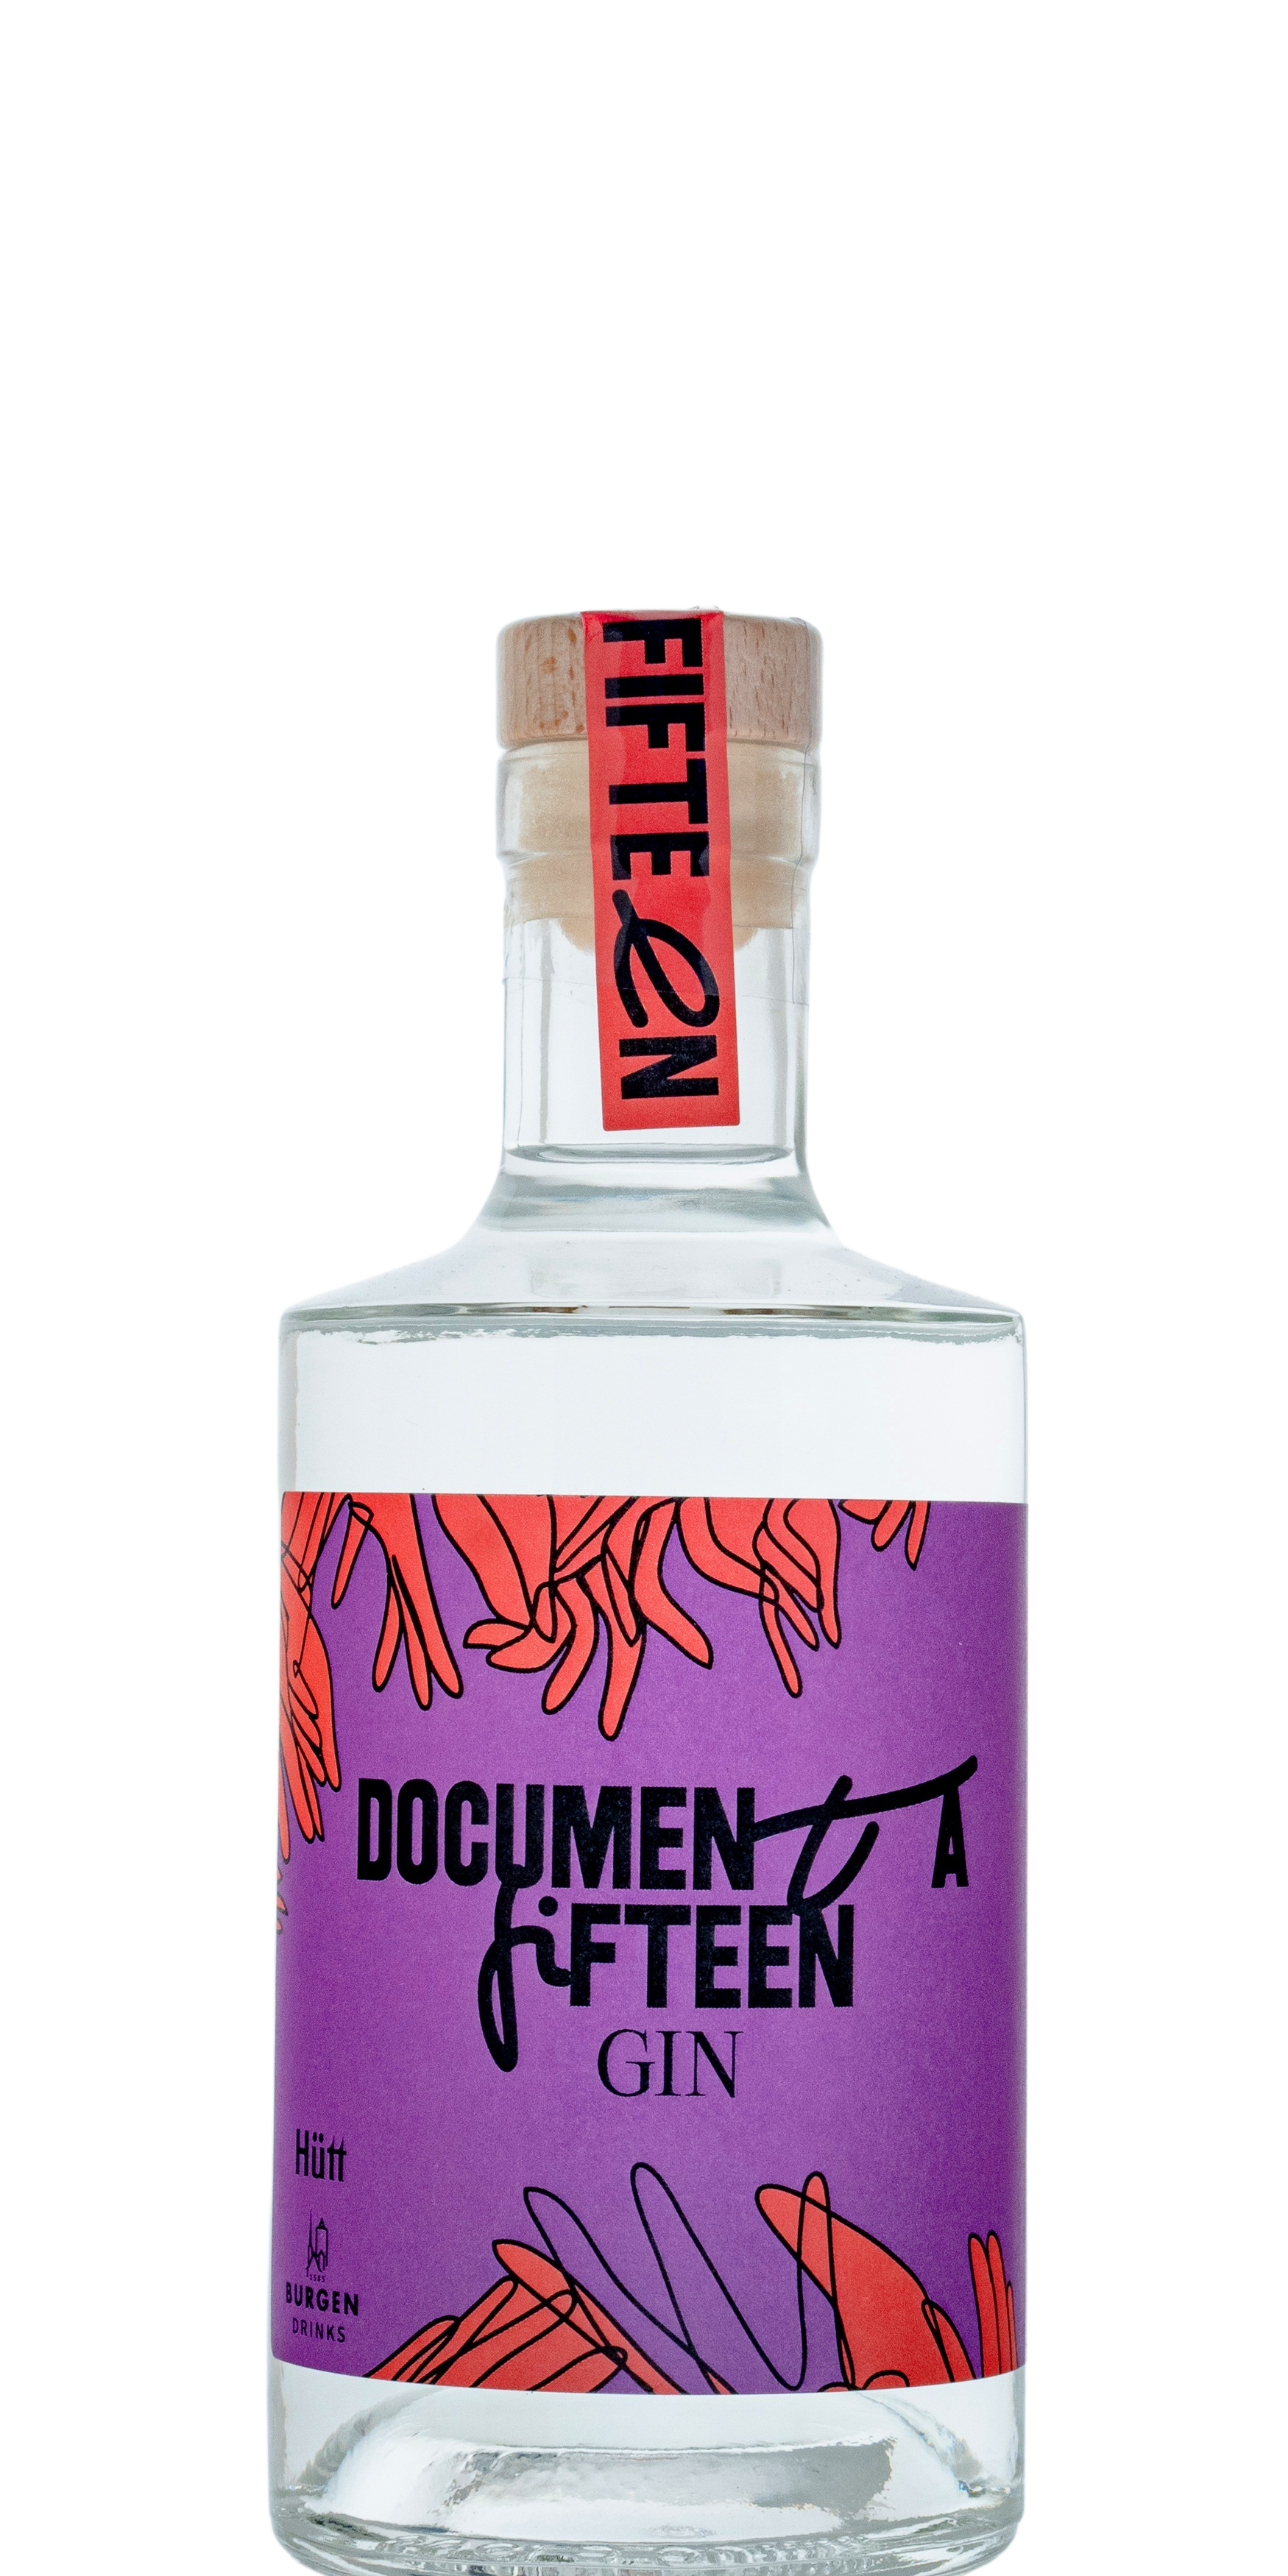 burgen-documenta-fifteen-gin-500ml.png